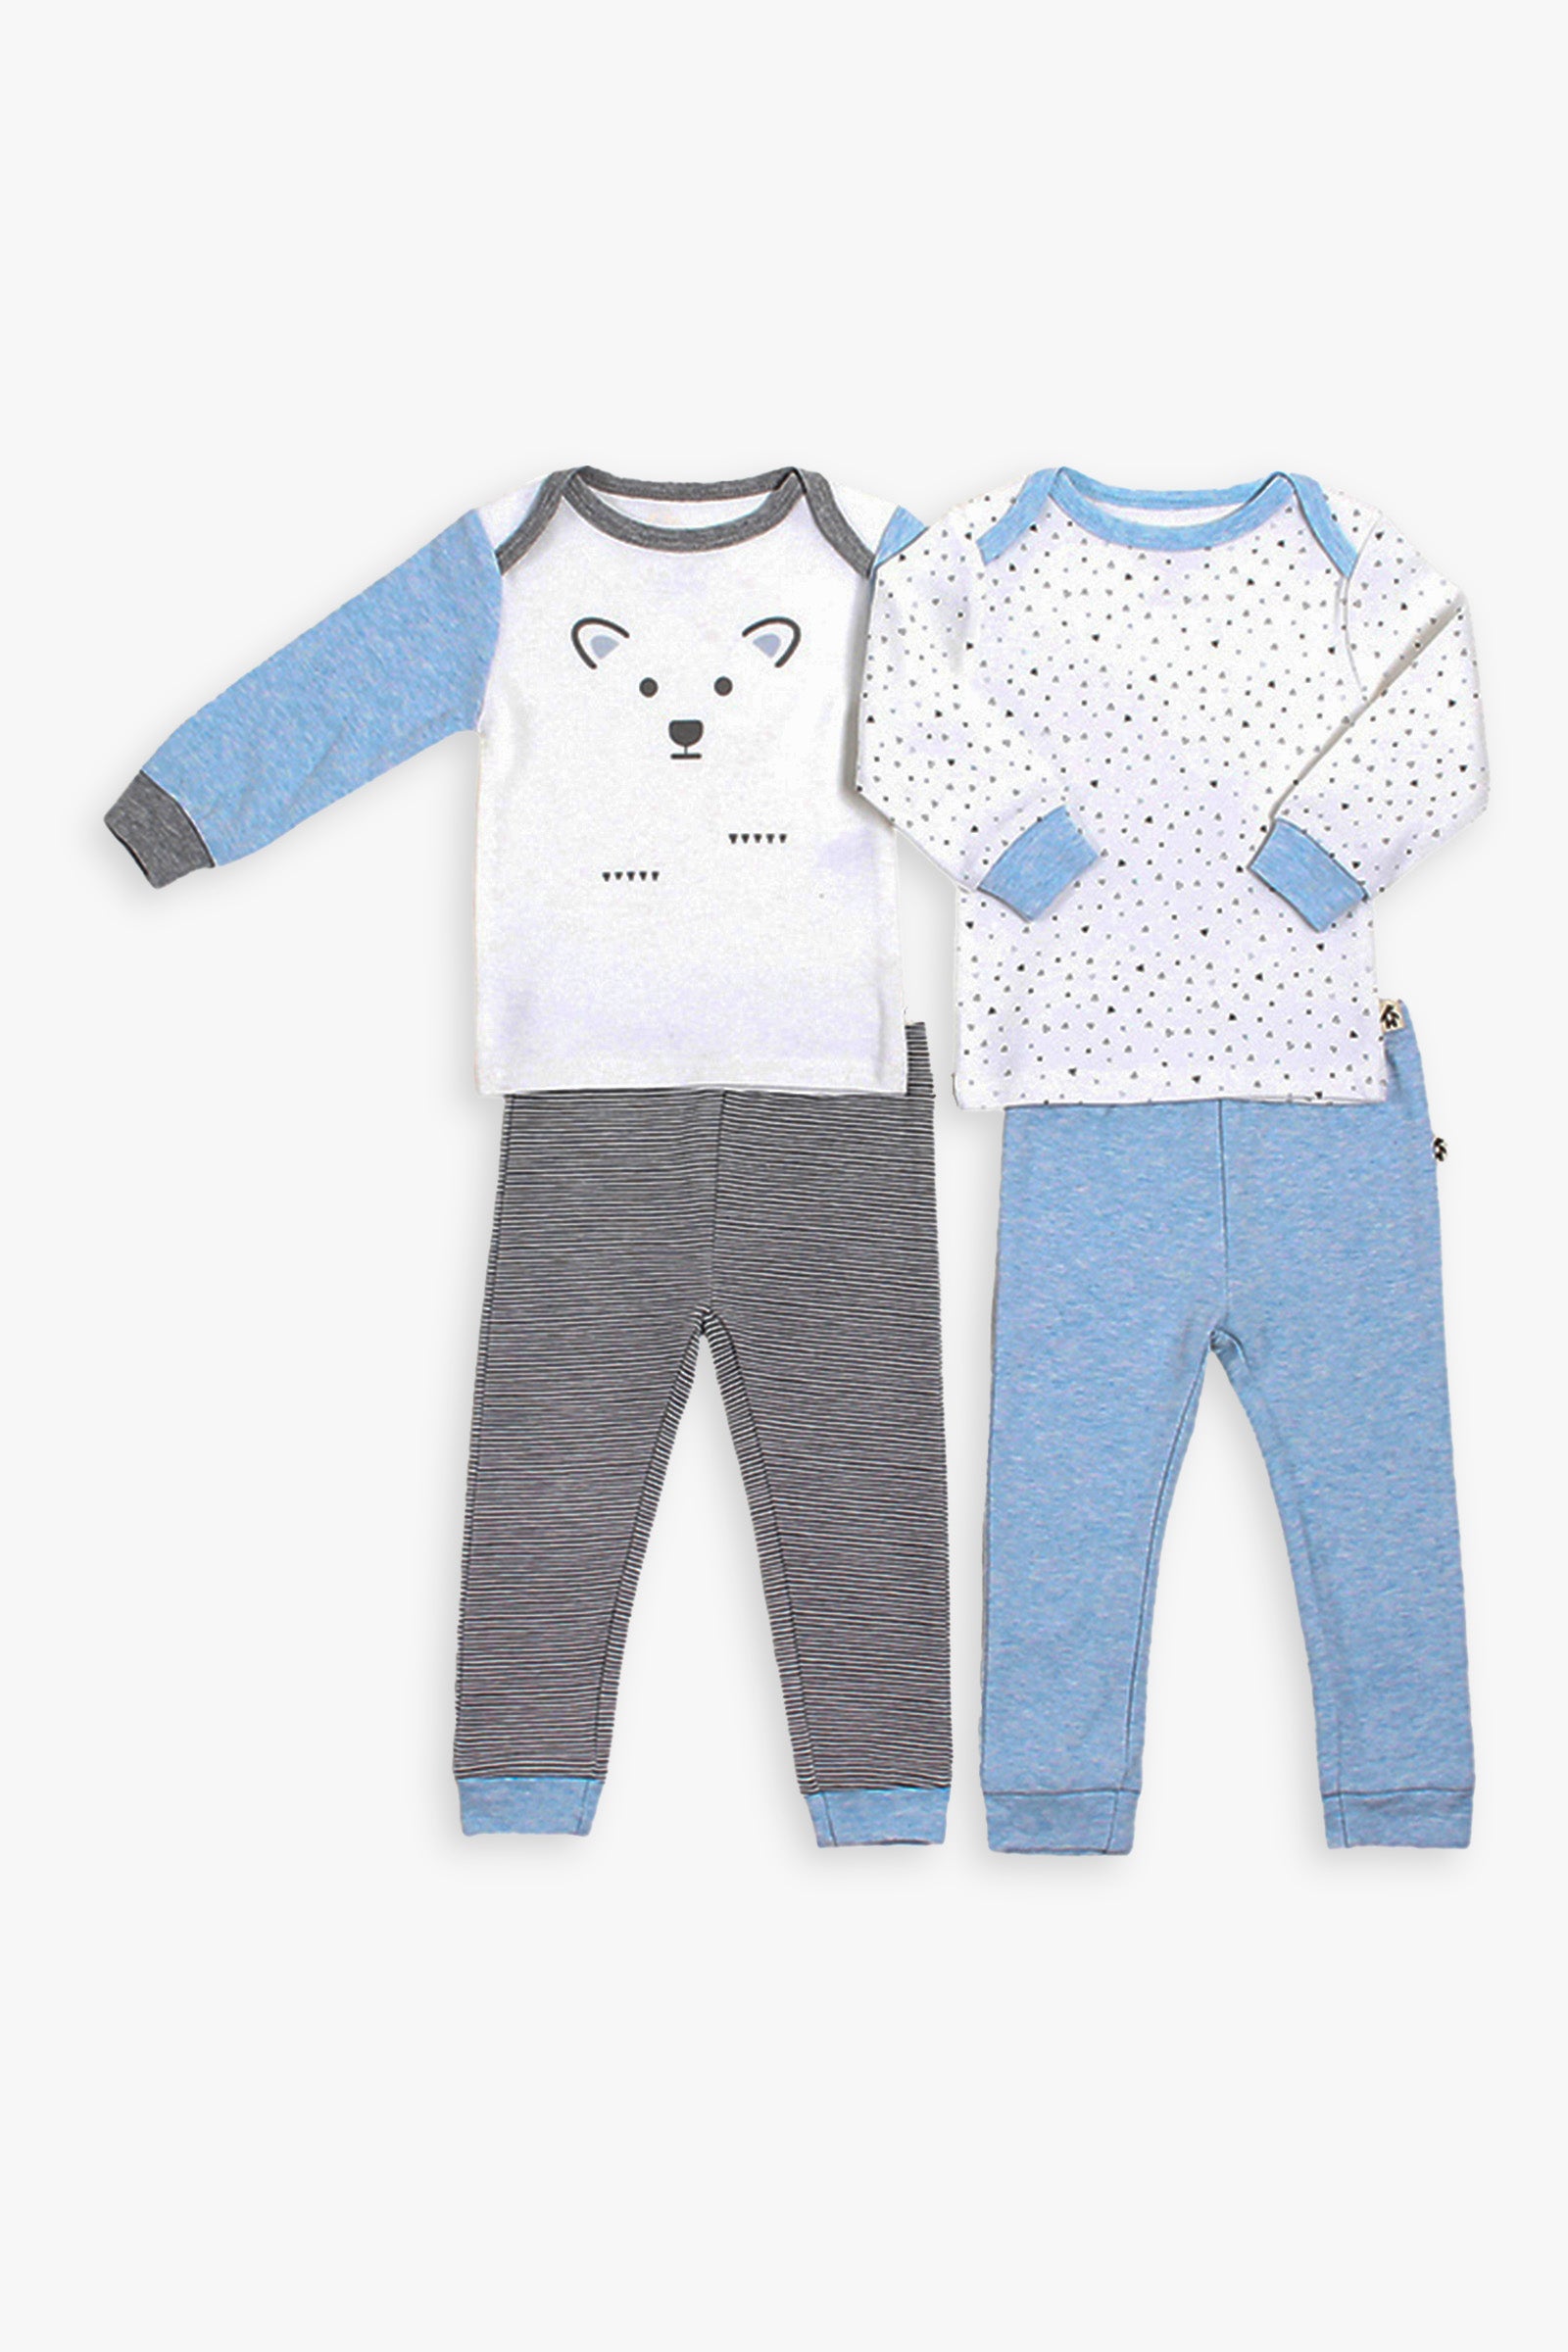 Snugabye Dream Baby Infant 2 Pack Pajama Set